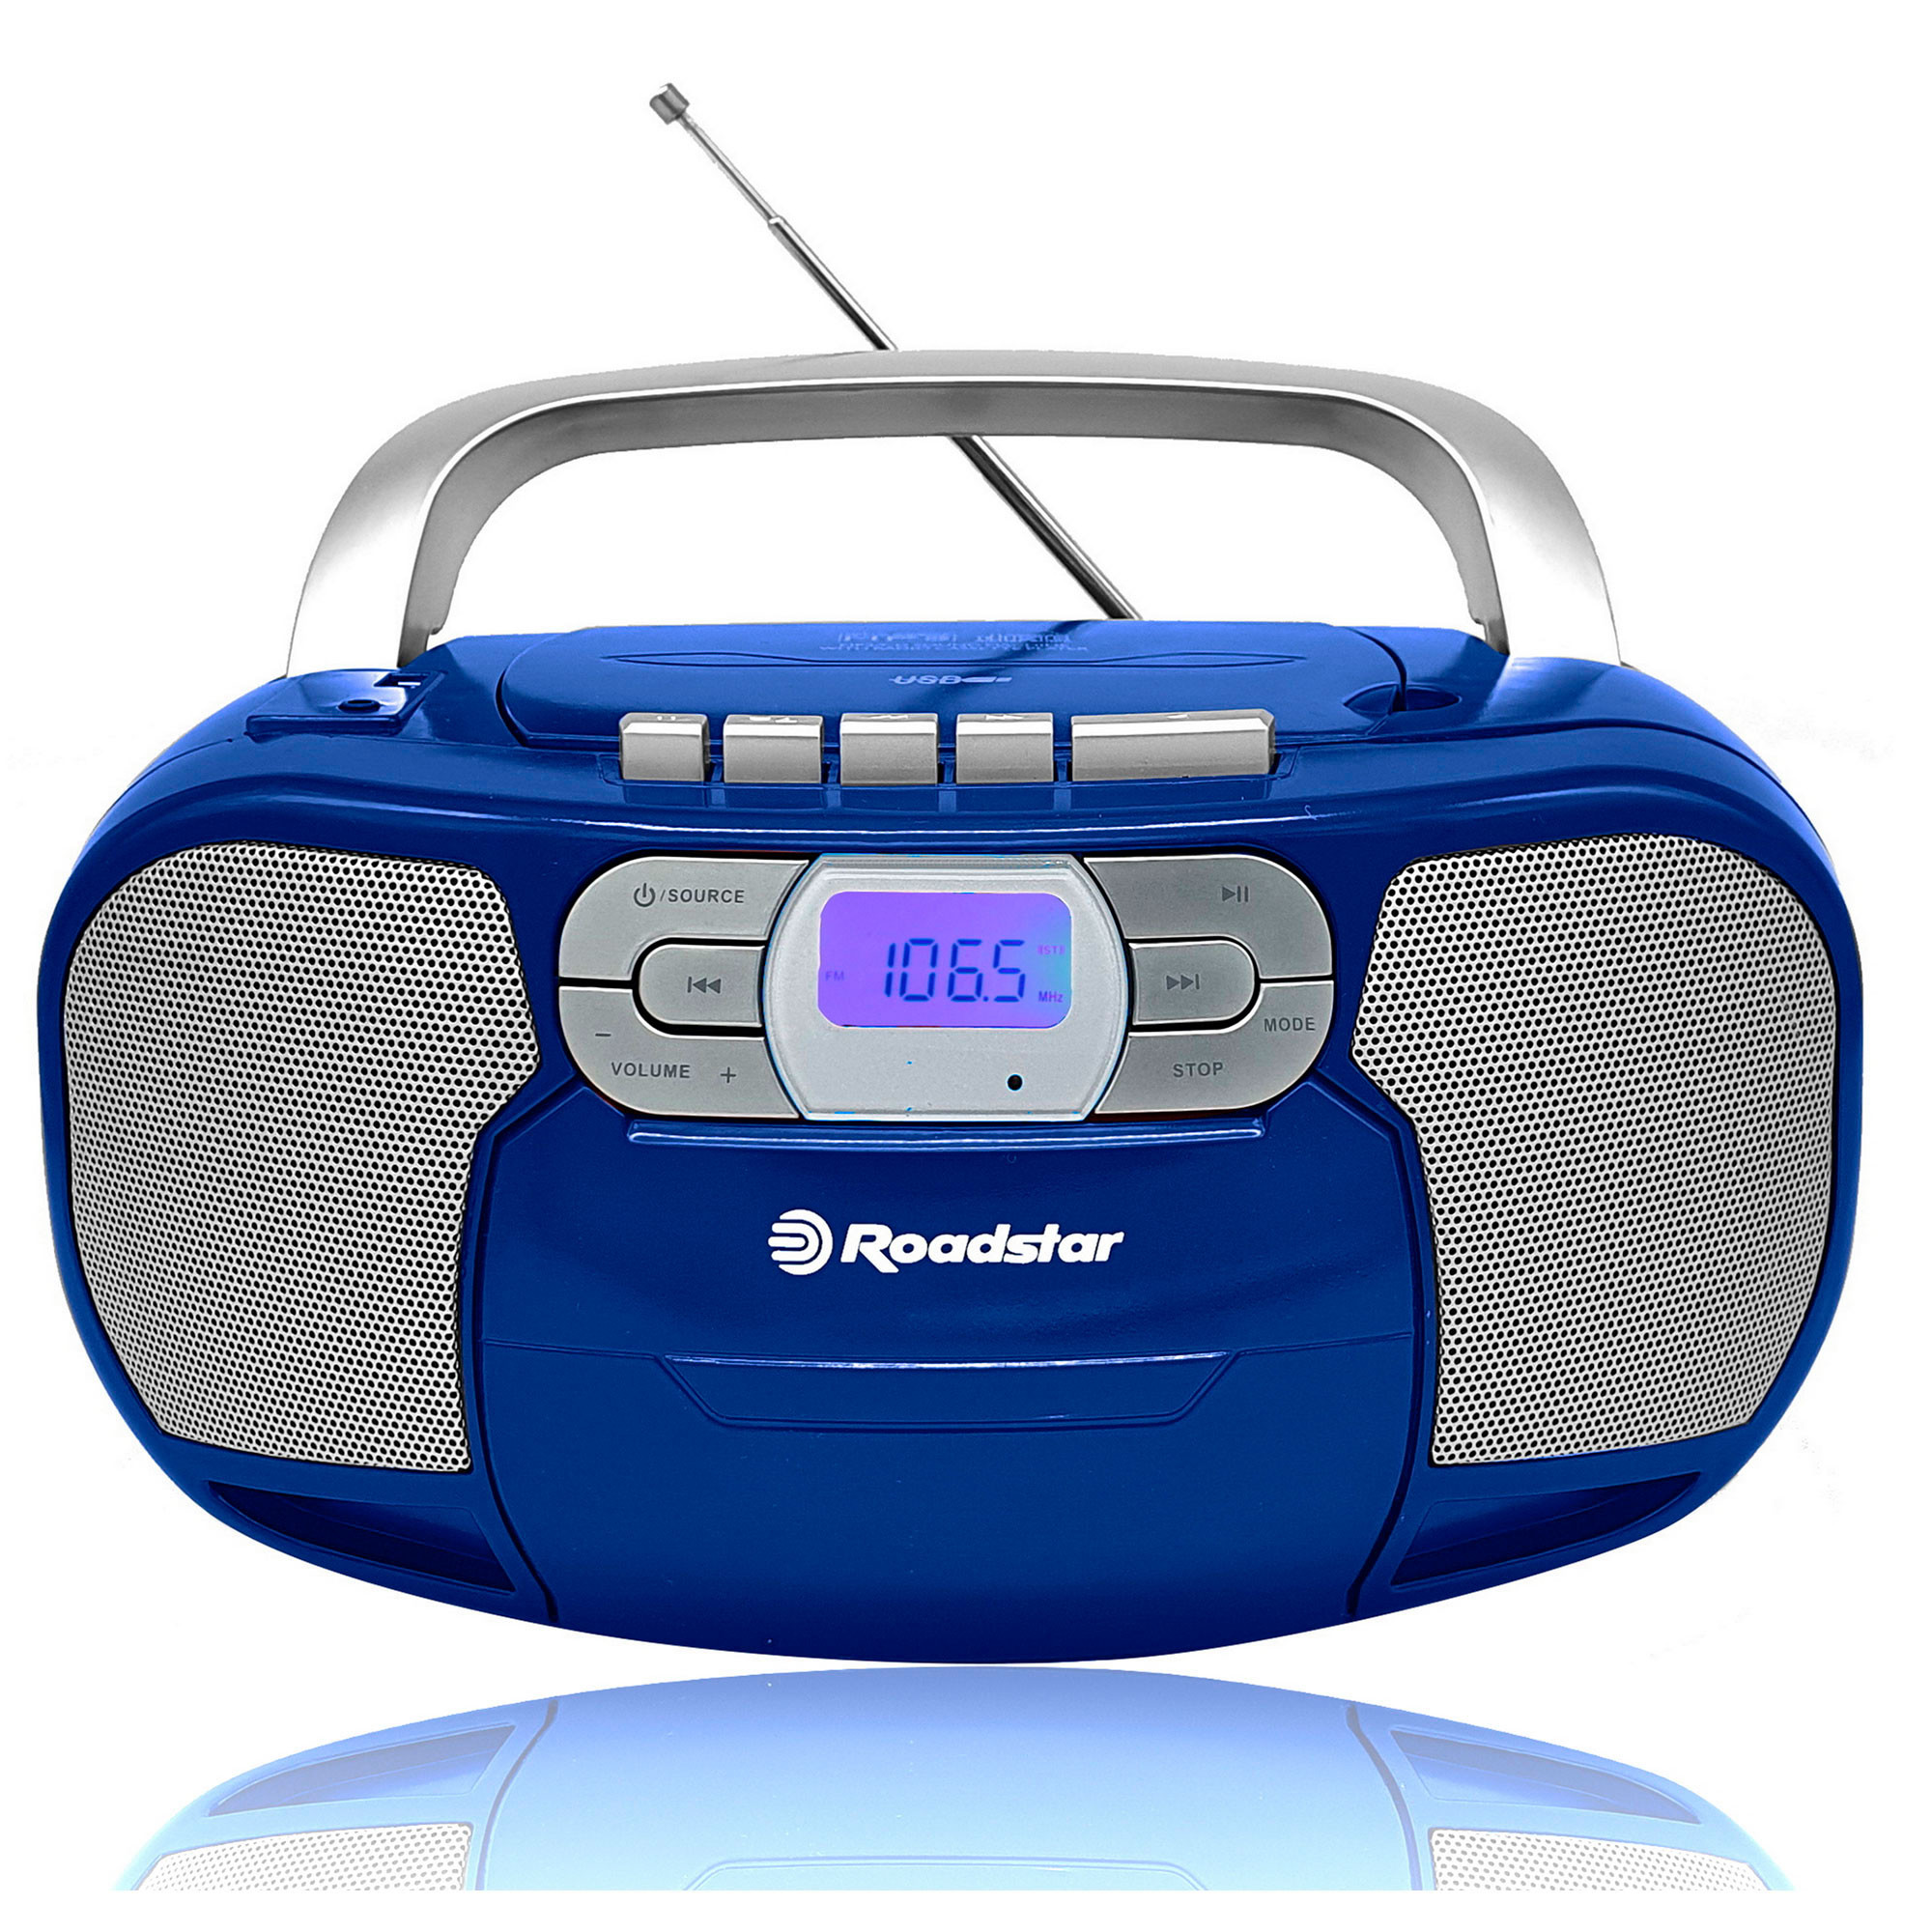 Roadstar RCR-4635UMP/BL Radio CD Portátil Cassette, Radio Digital PLL FM,  Boombox Reproductor CD-MP3, USB, AUX-IN, Salida de Auriculares, Azul